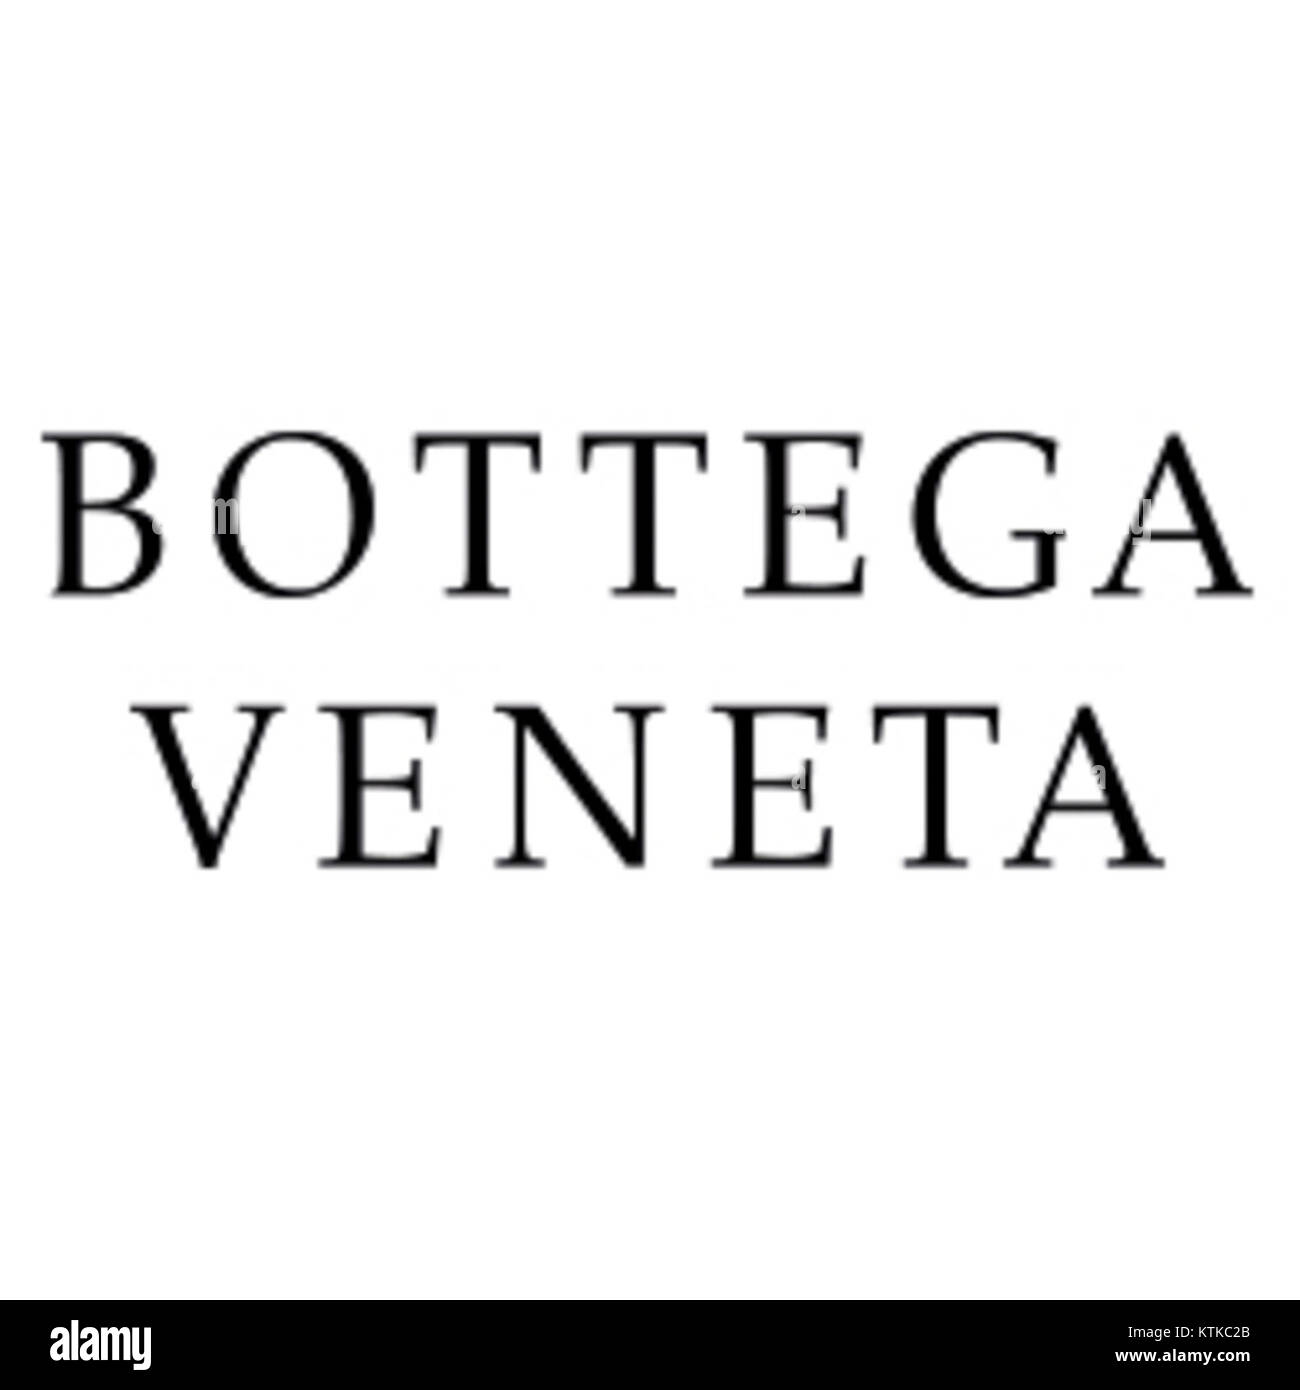 File:Bottega Veneta logo 3.png - Wikimedia Commons